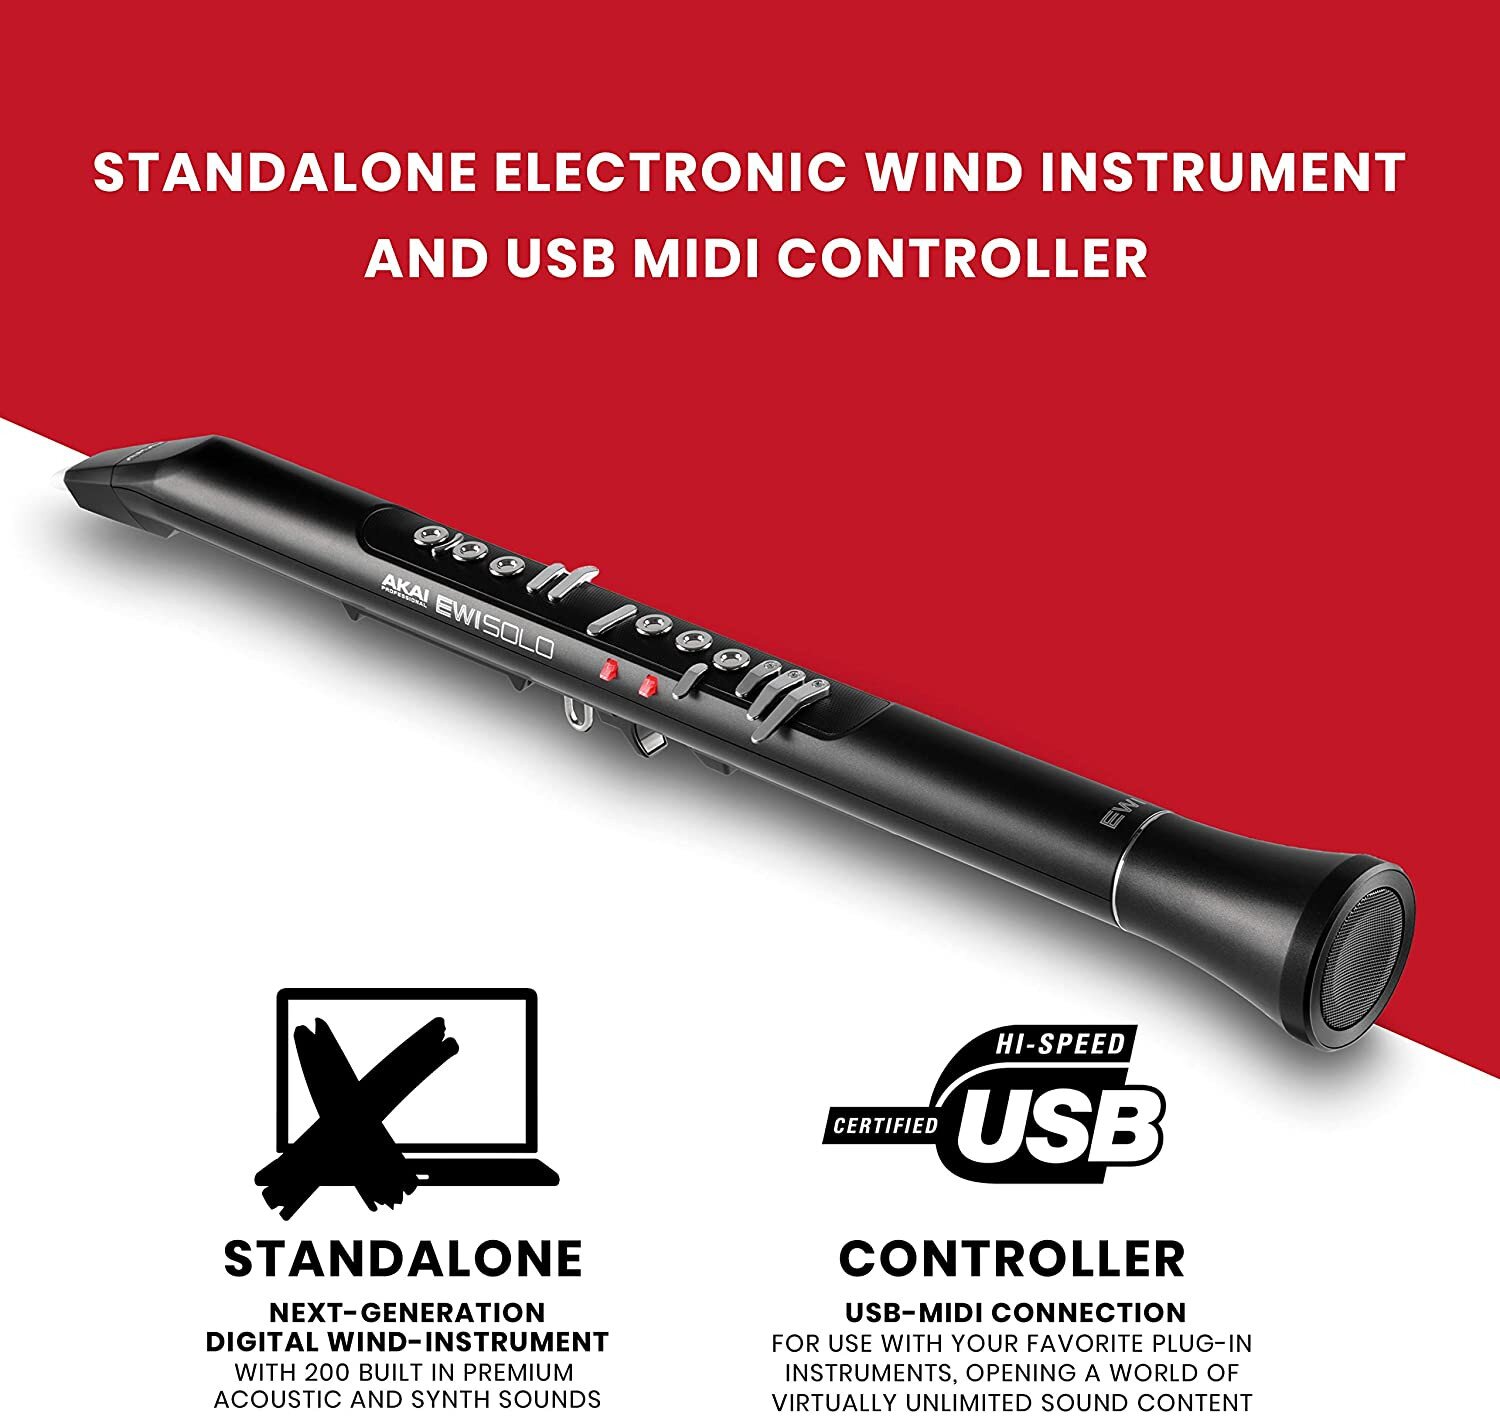 Buy Akai Professional EWI SOLO Electronic Wind Instrument online